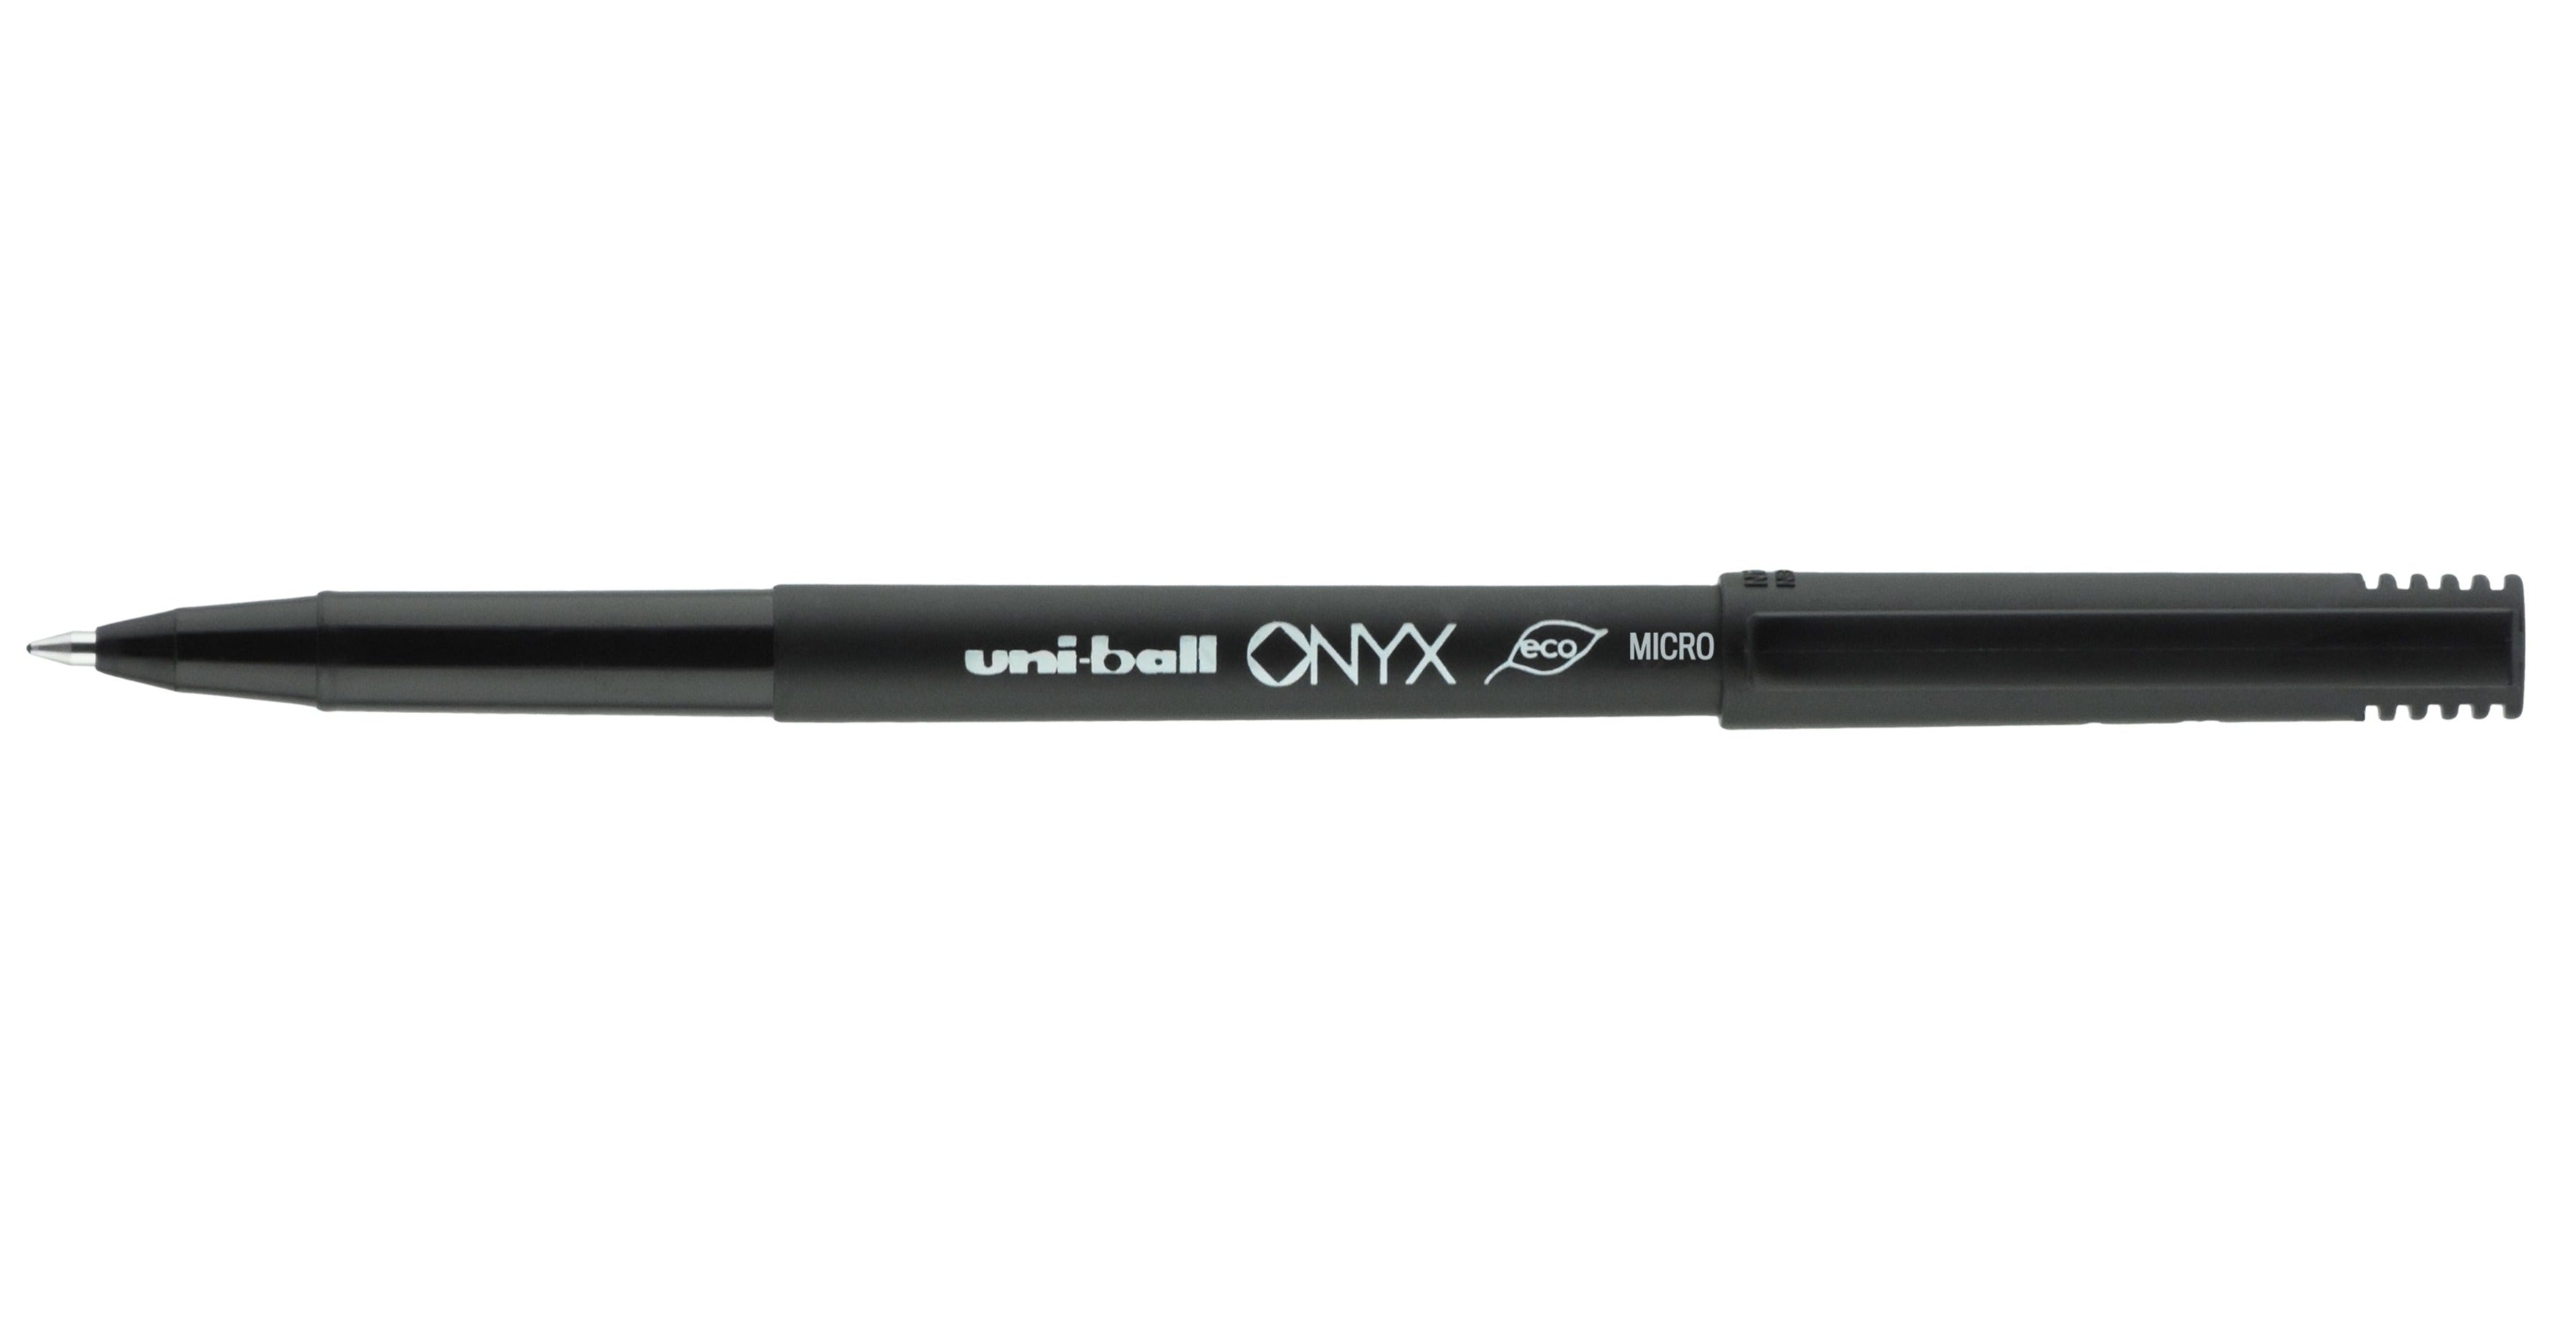 Uni POSCA markers at Cult Pens - huge range in stock